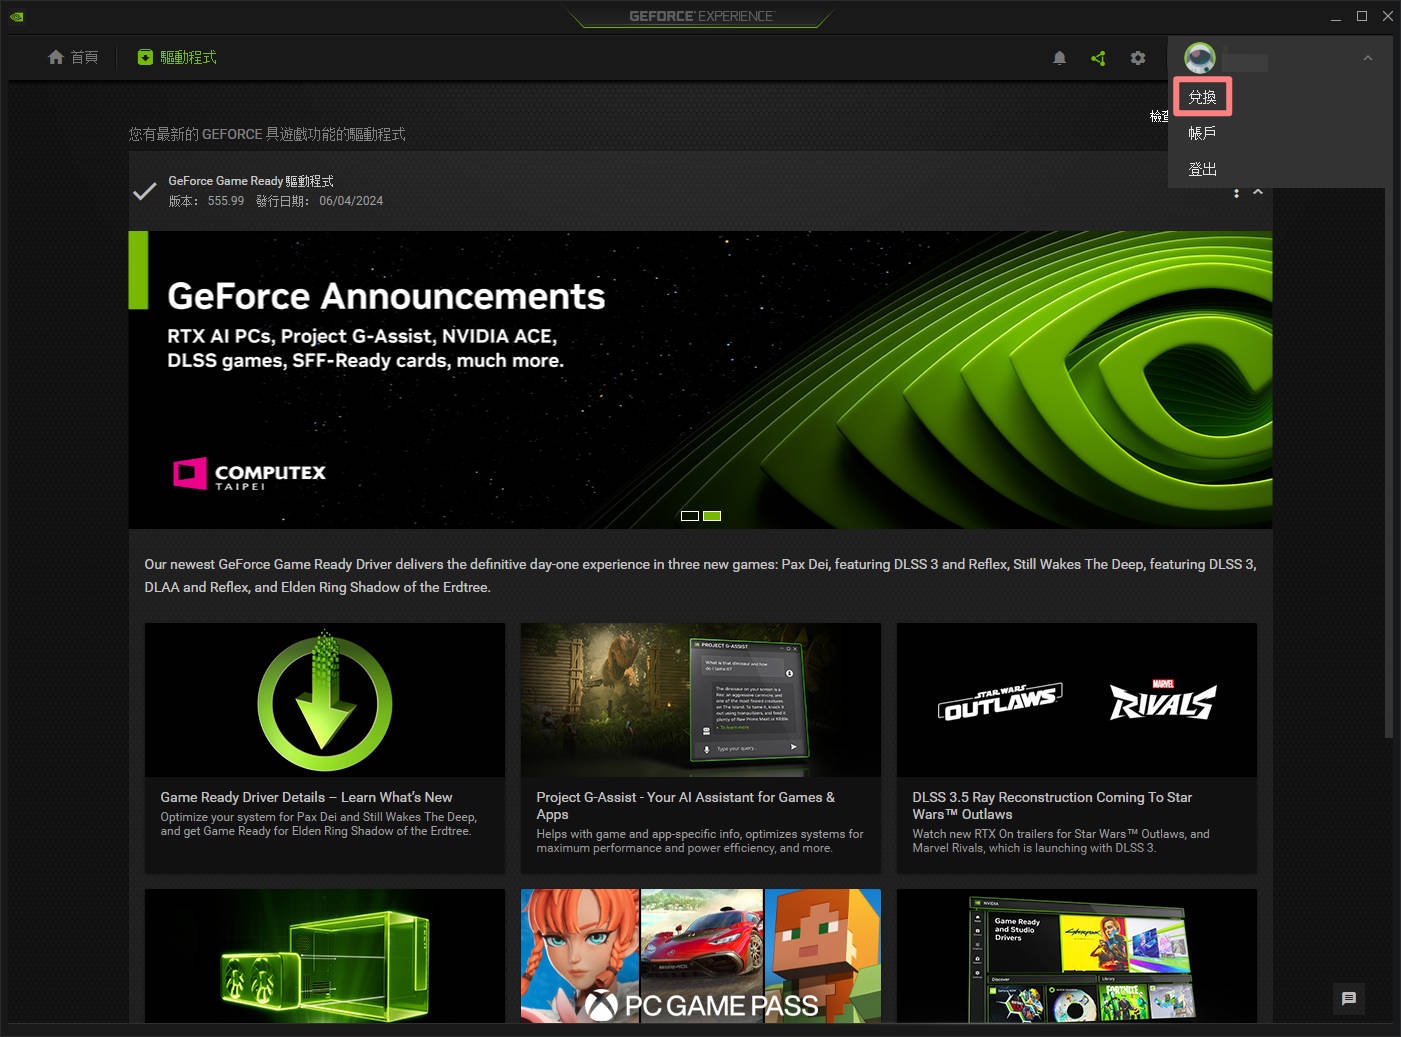 NVIDIA 顯卡用戶免費領取 3 個月 Xbox Game Pass！下載新手教學